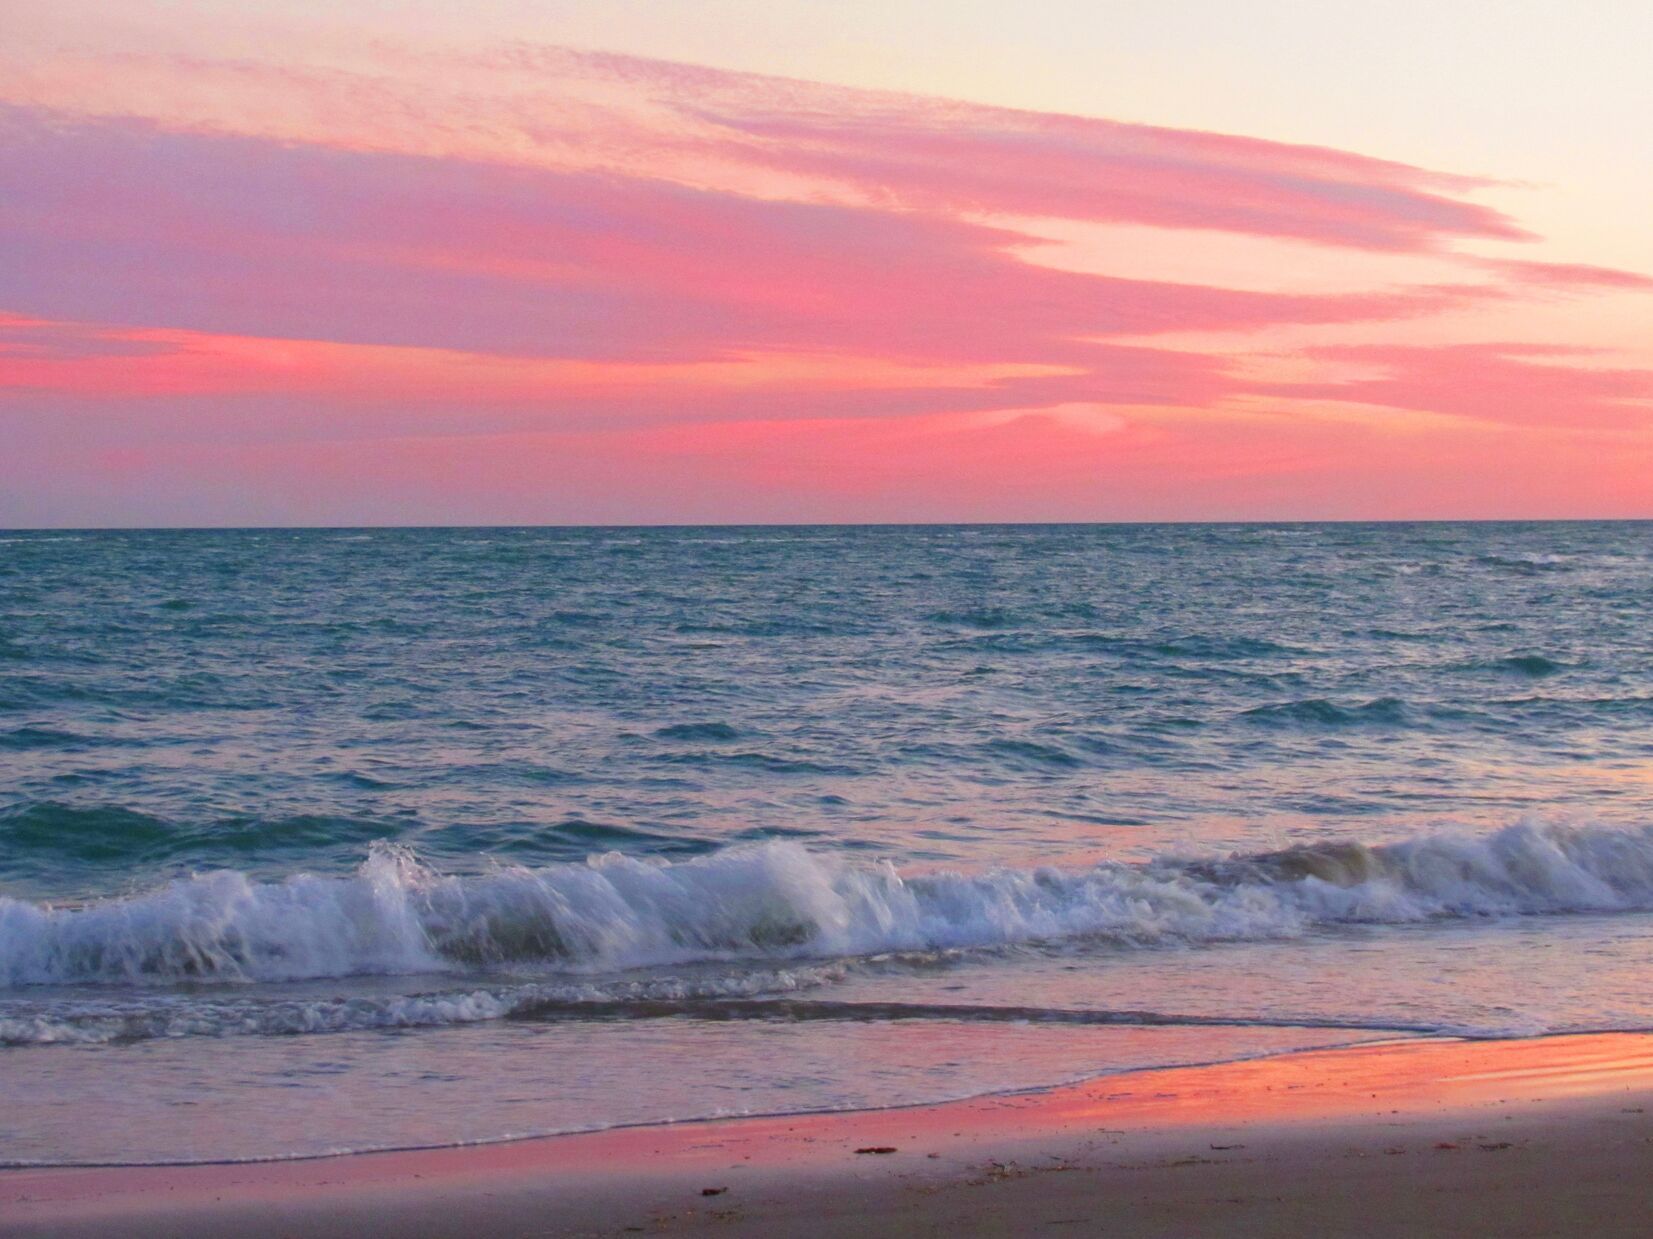 Gentle waves at sunset on Playa Encanto beach